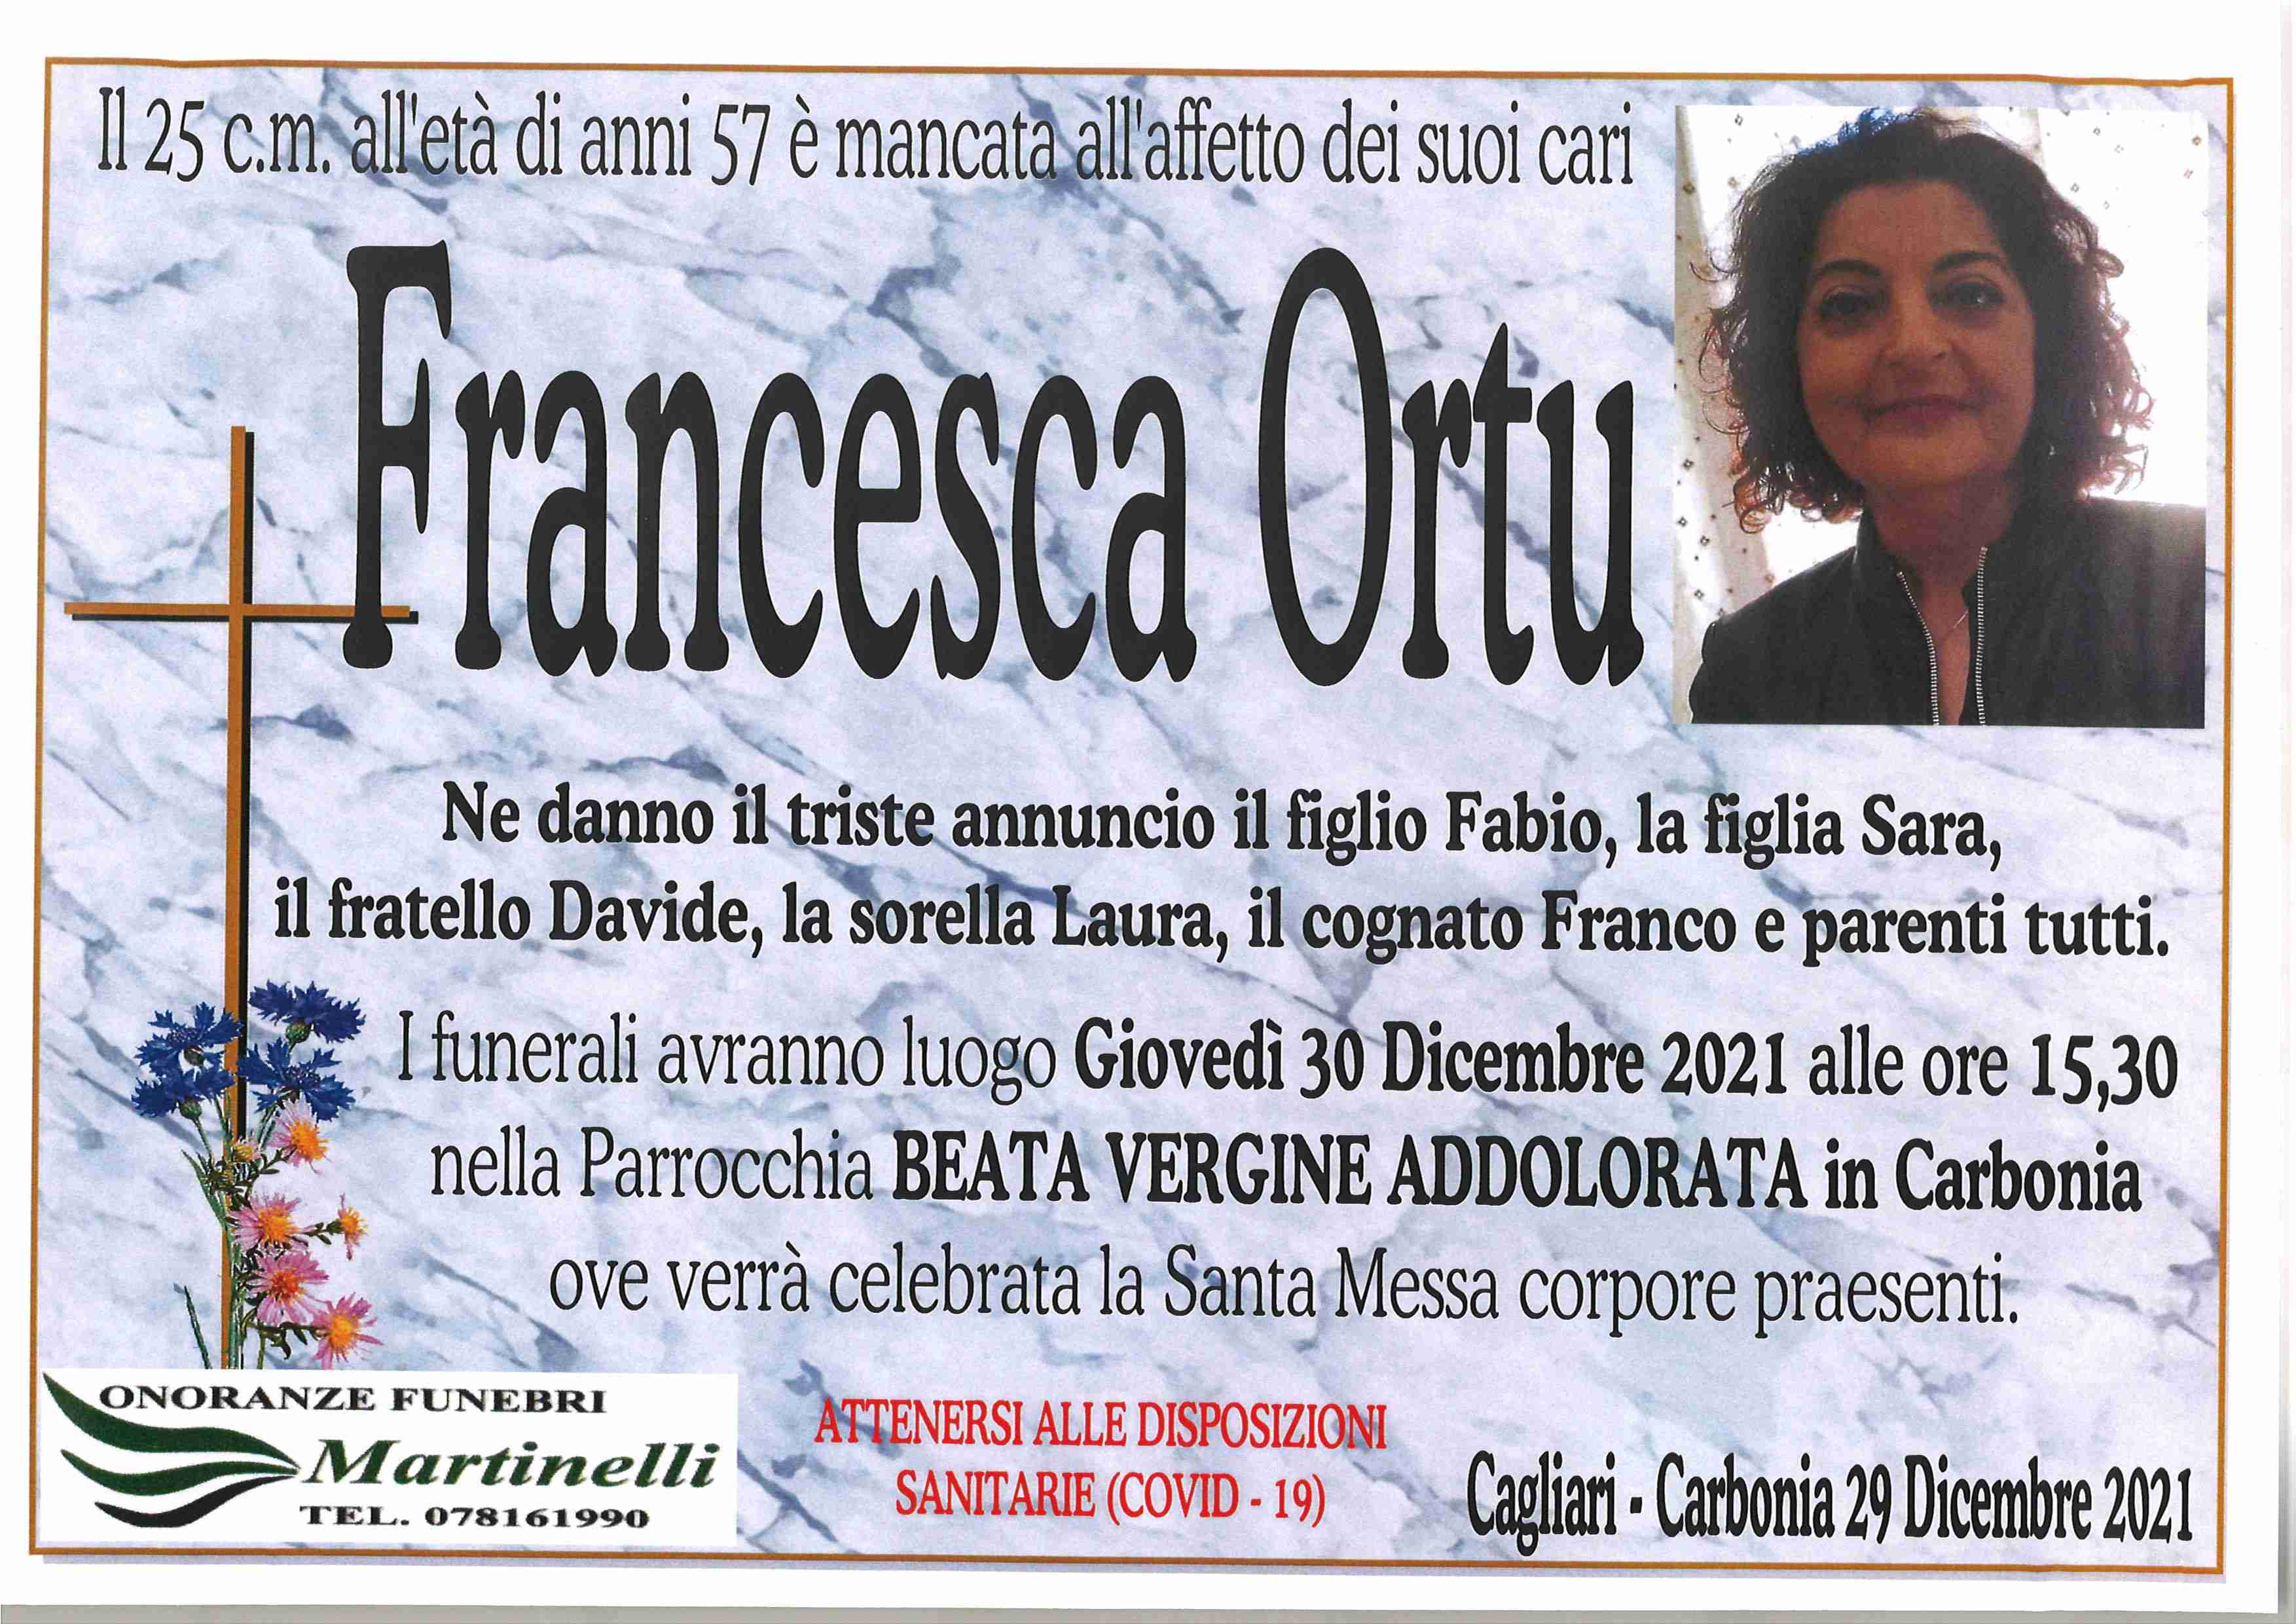 Francesca Ortu